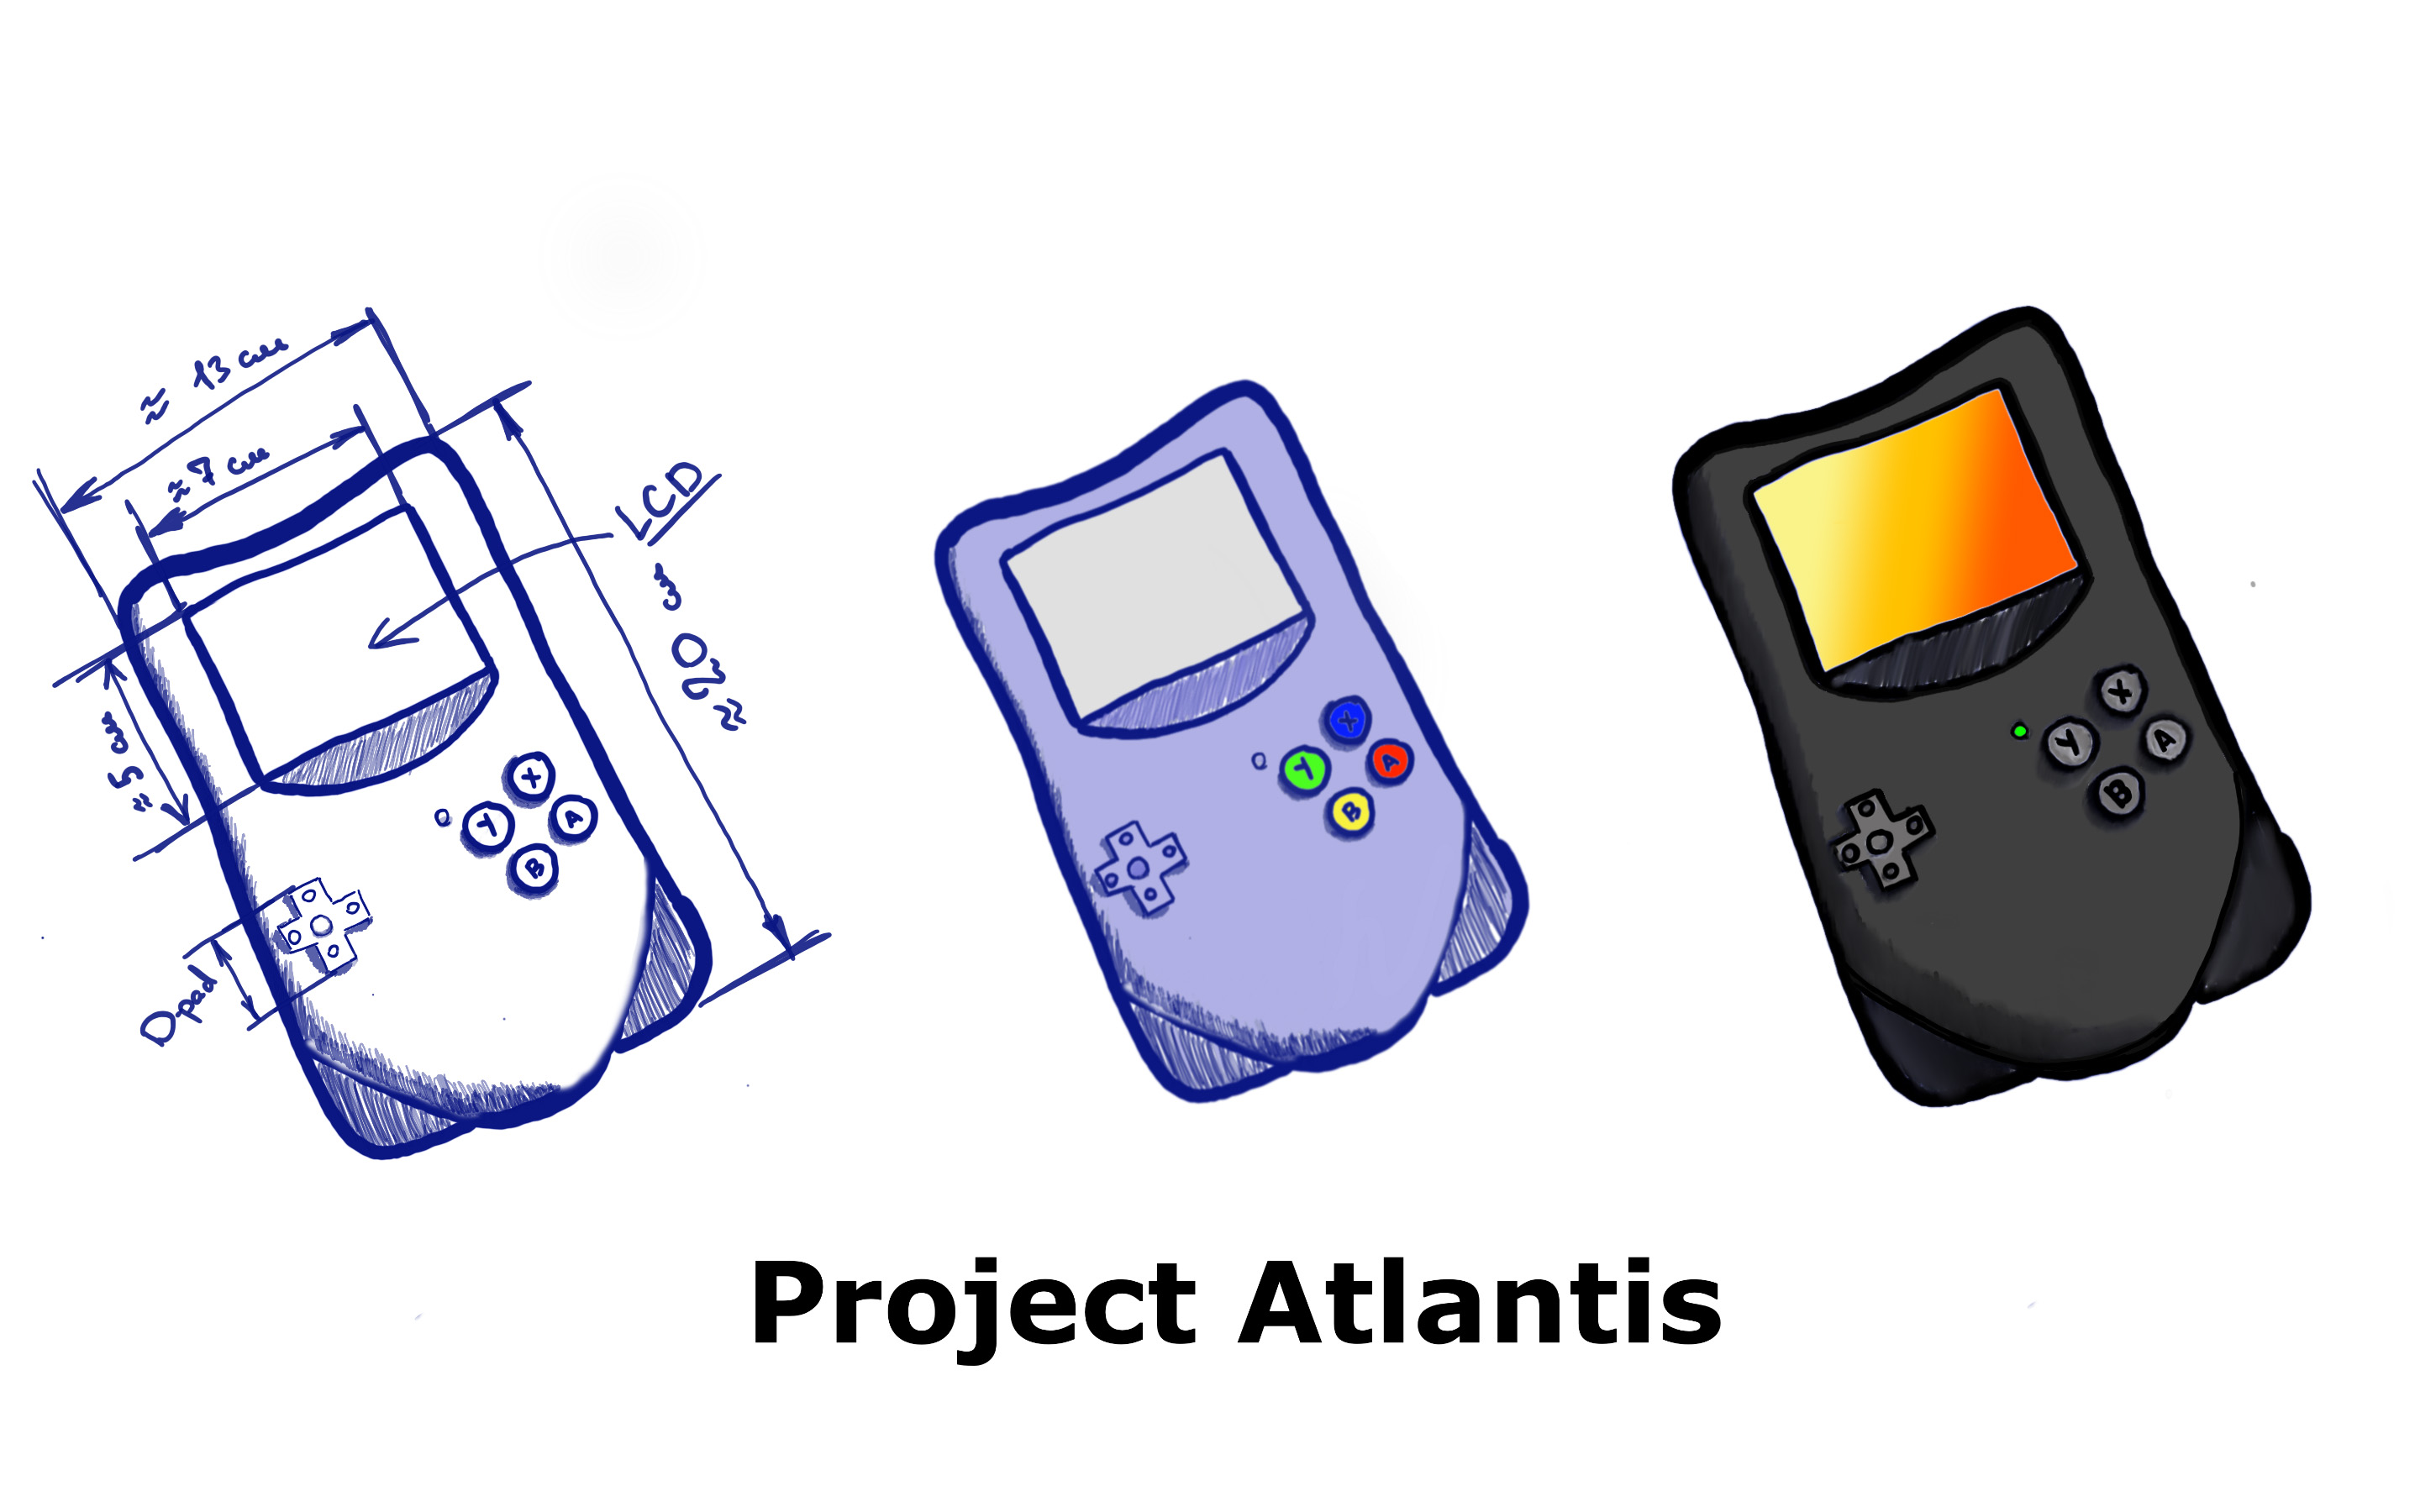 Project Atlantis